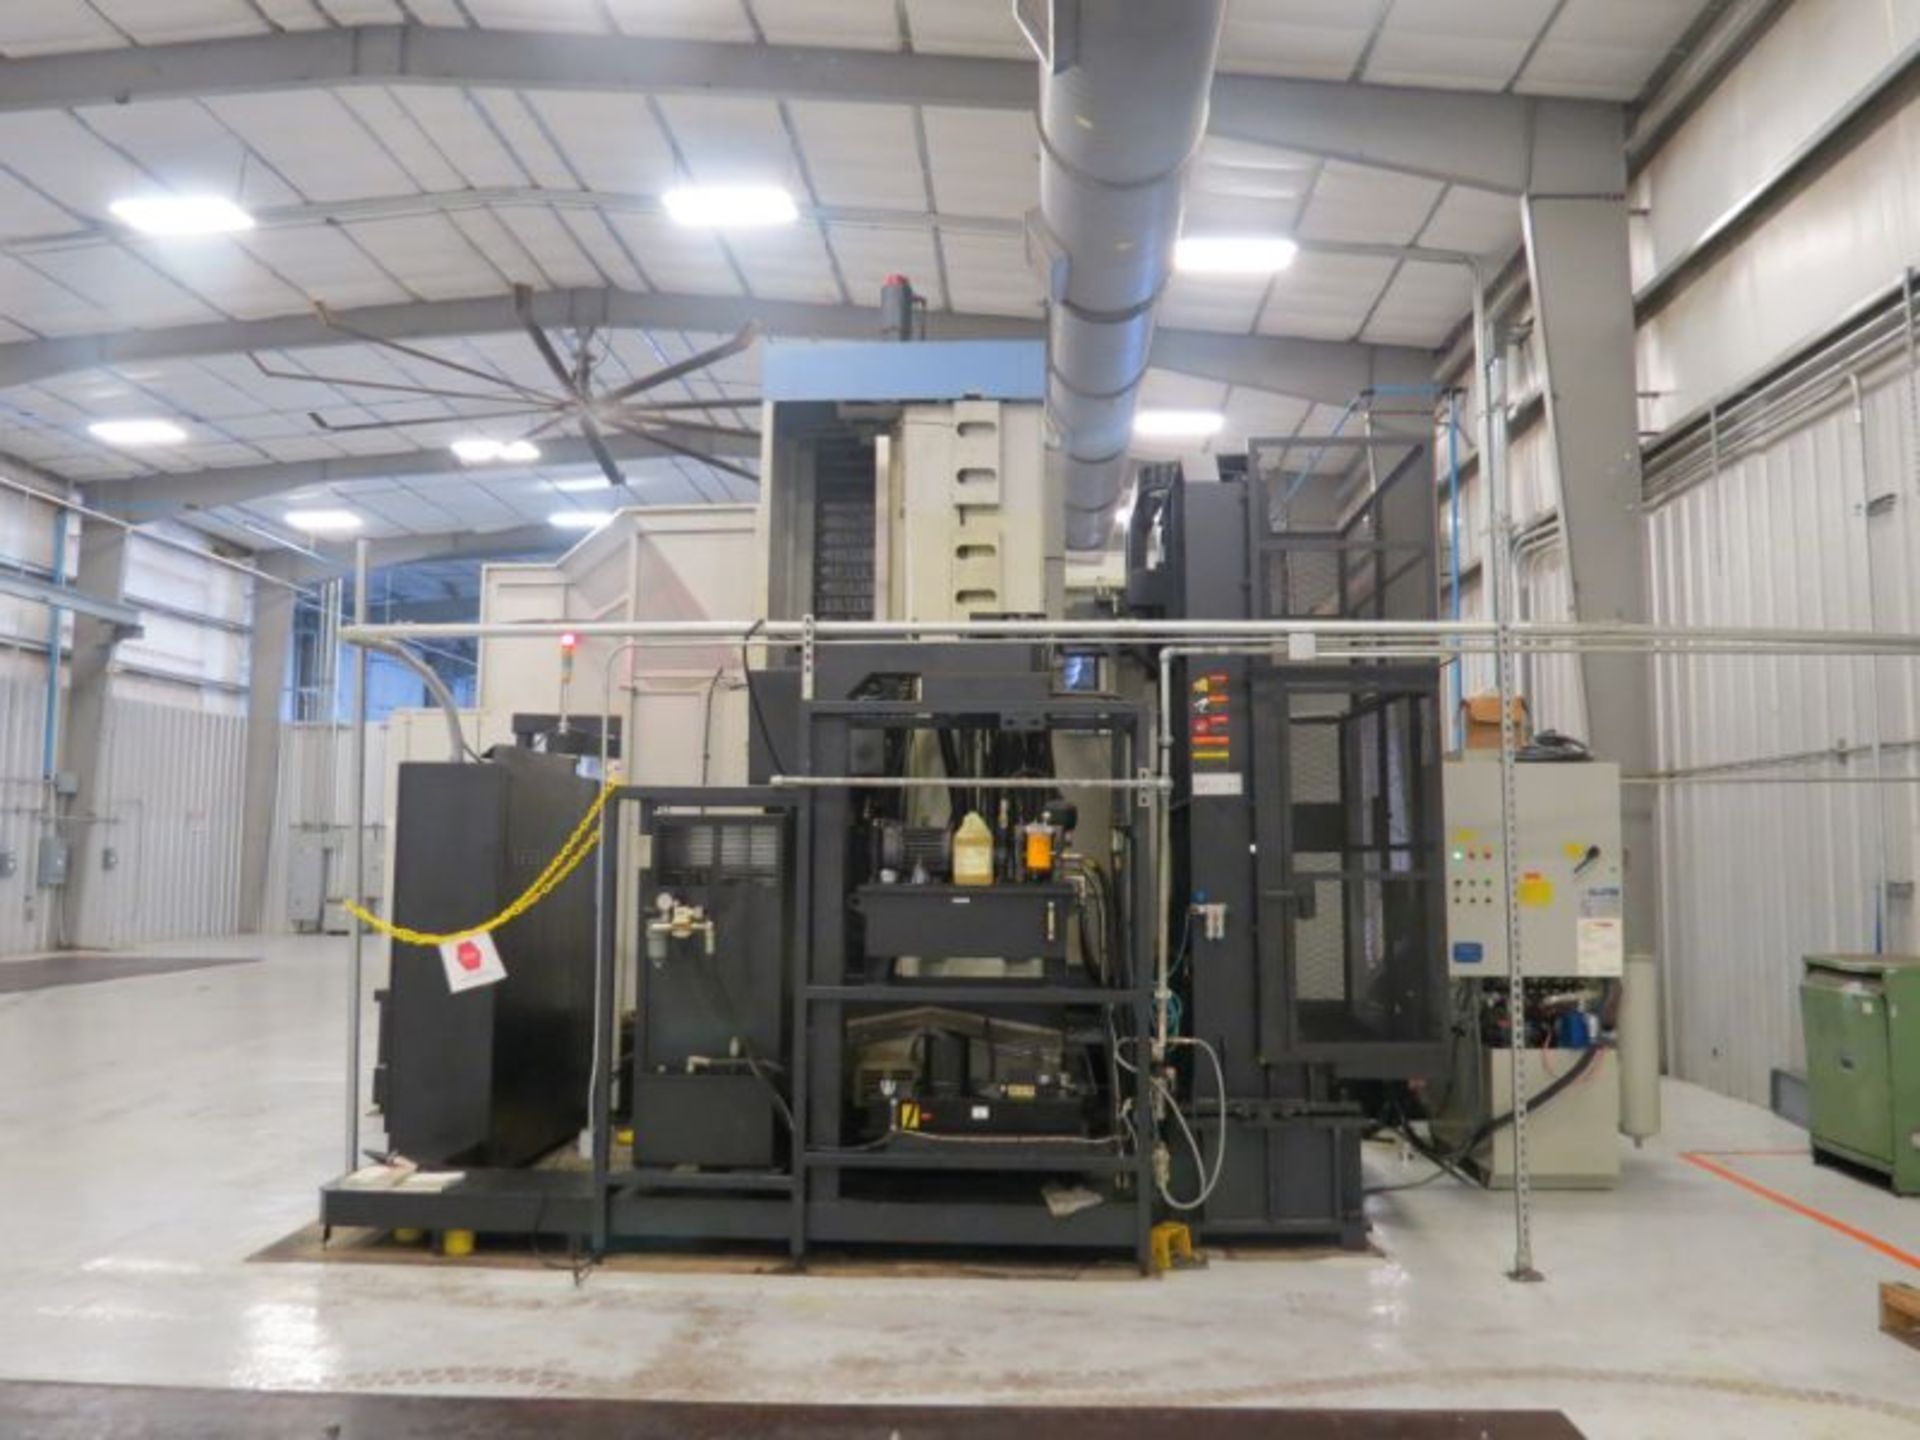 5"Doosan DBC130 CNC Horizontal Boring & Milling Machine, Fanuc 31-iA Ctrl *Located in Broussard, LA* - Image 13 of 27